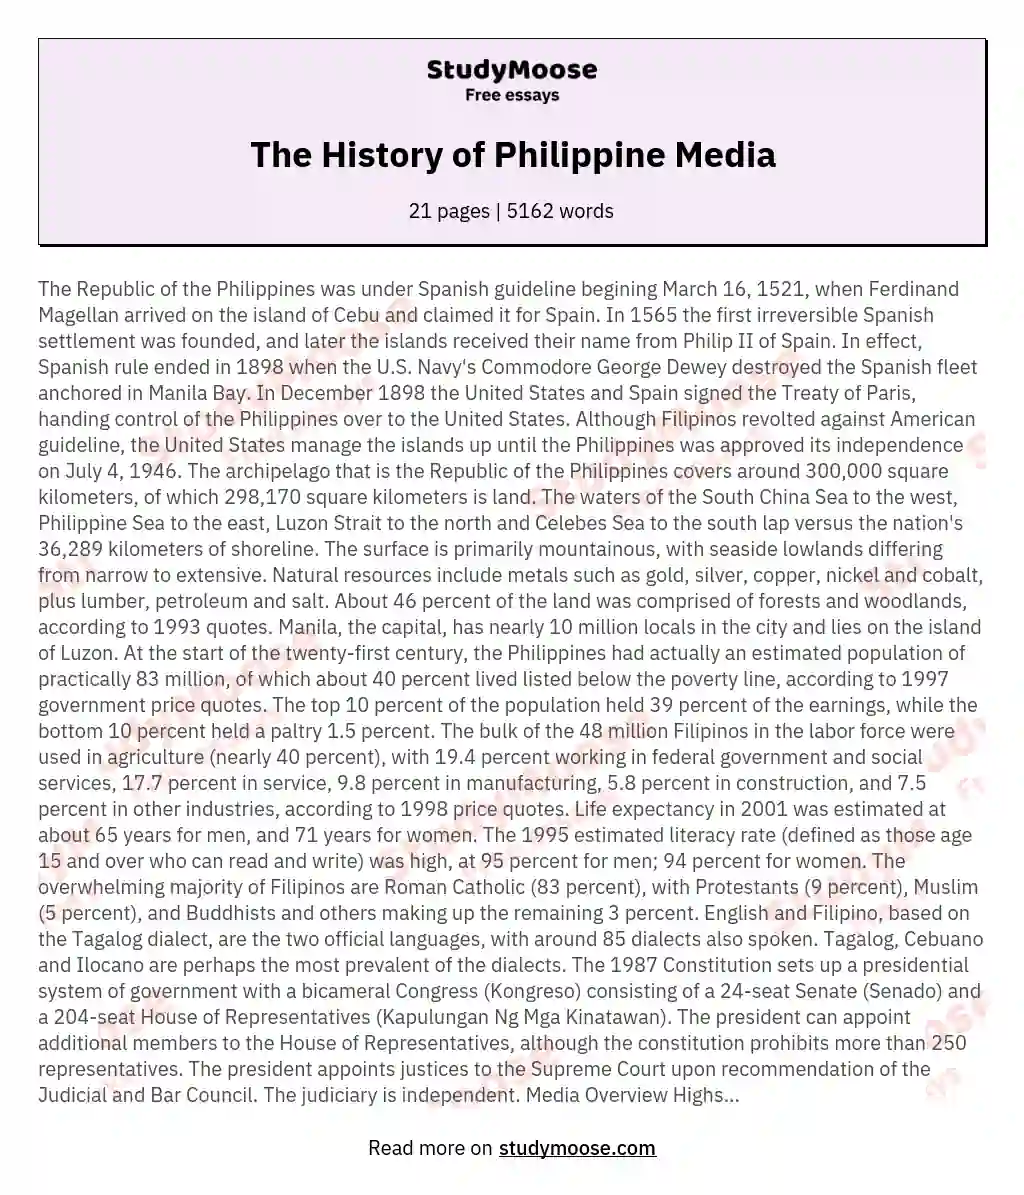 The History of Philippine Media essay